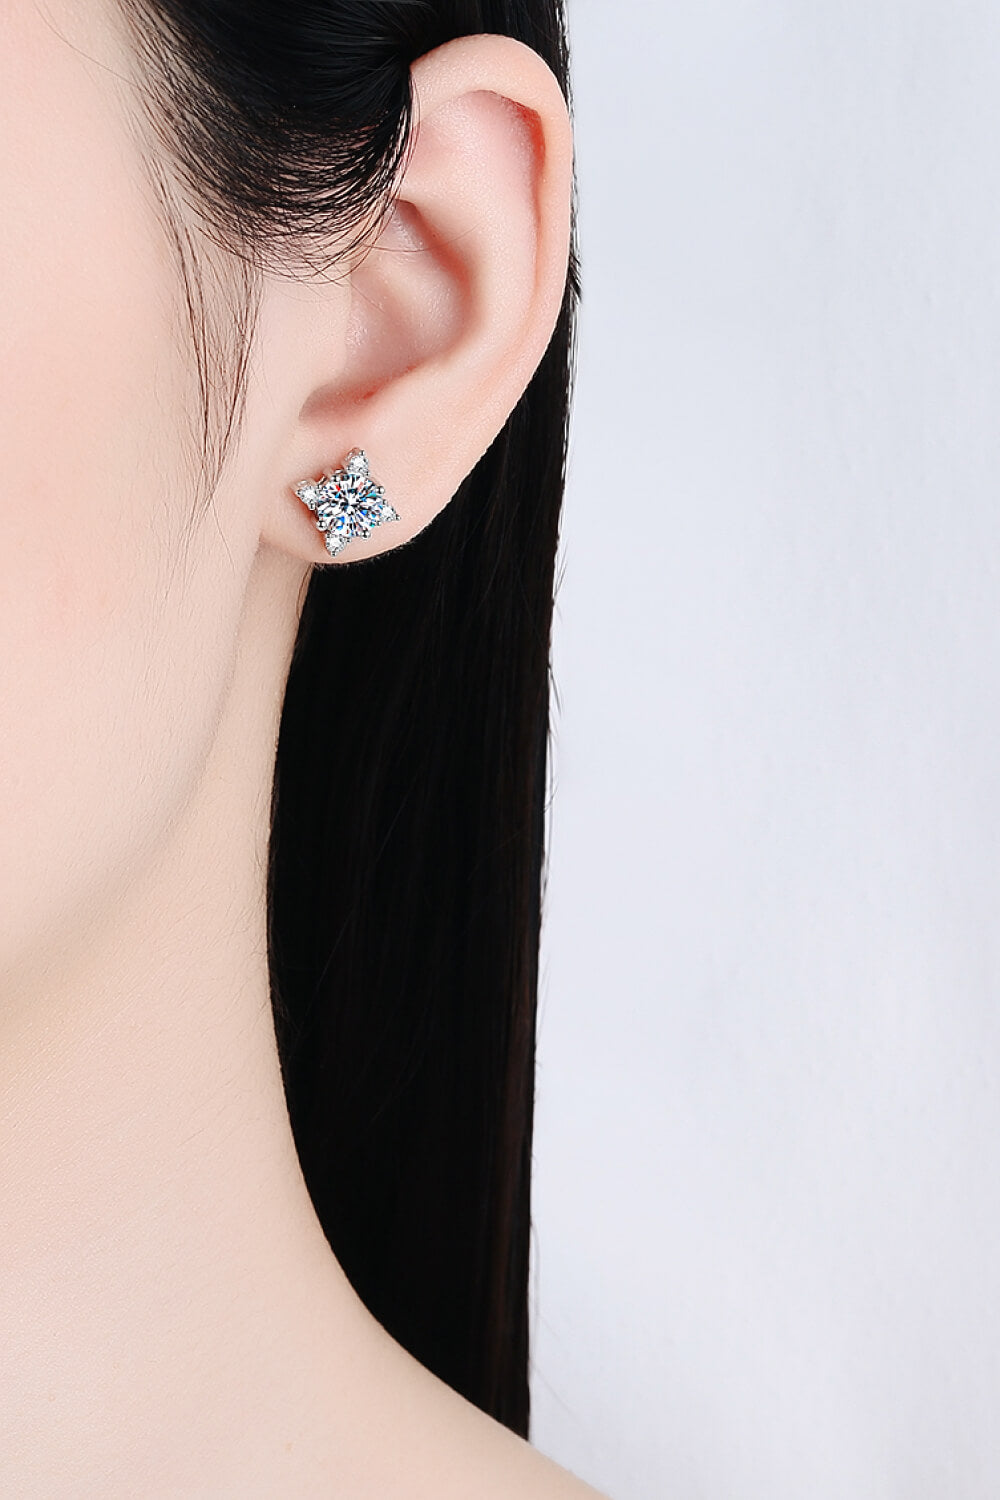 Four Leaf Clover 2 Carat Moissanite Stud Earrings - Thandynie